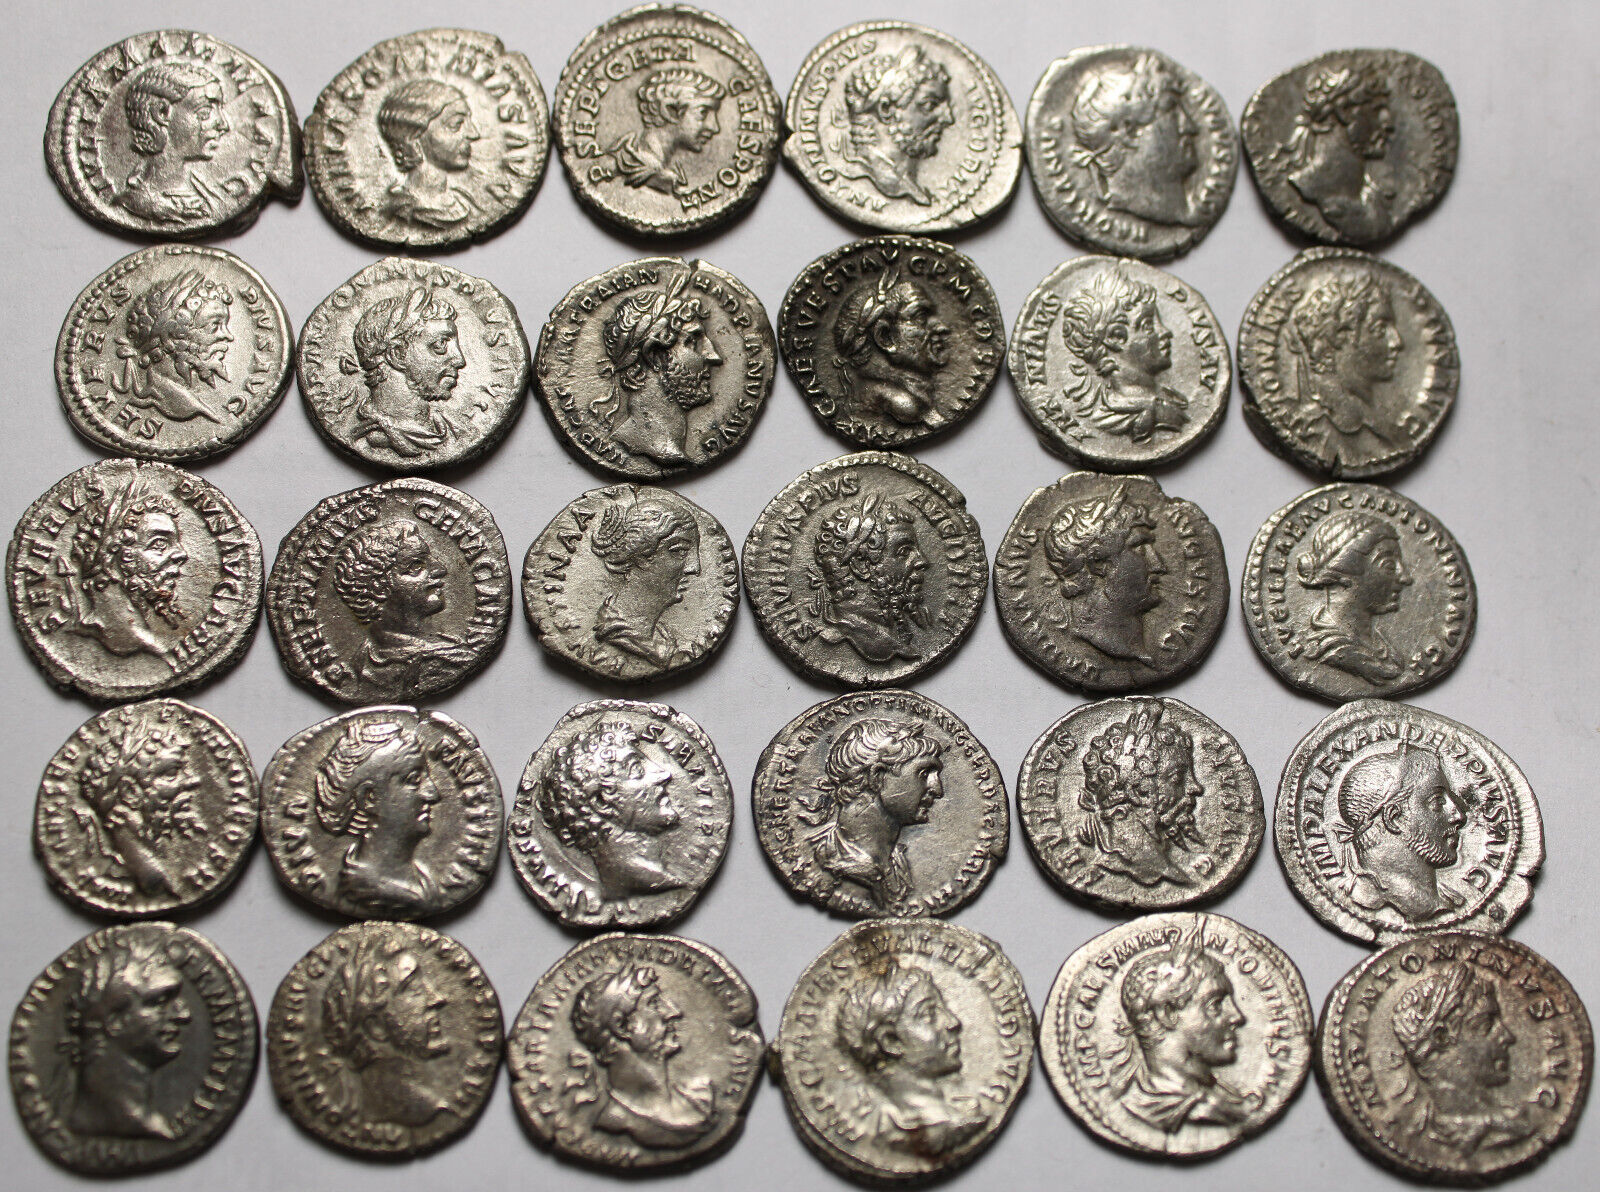 1 original Ancient Roman SILVER coin Denarius Trajan Faustina Hadrian Domitian Без бренда